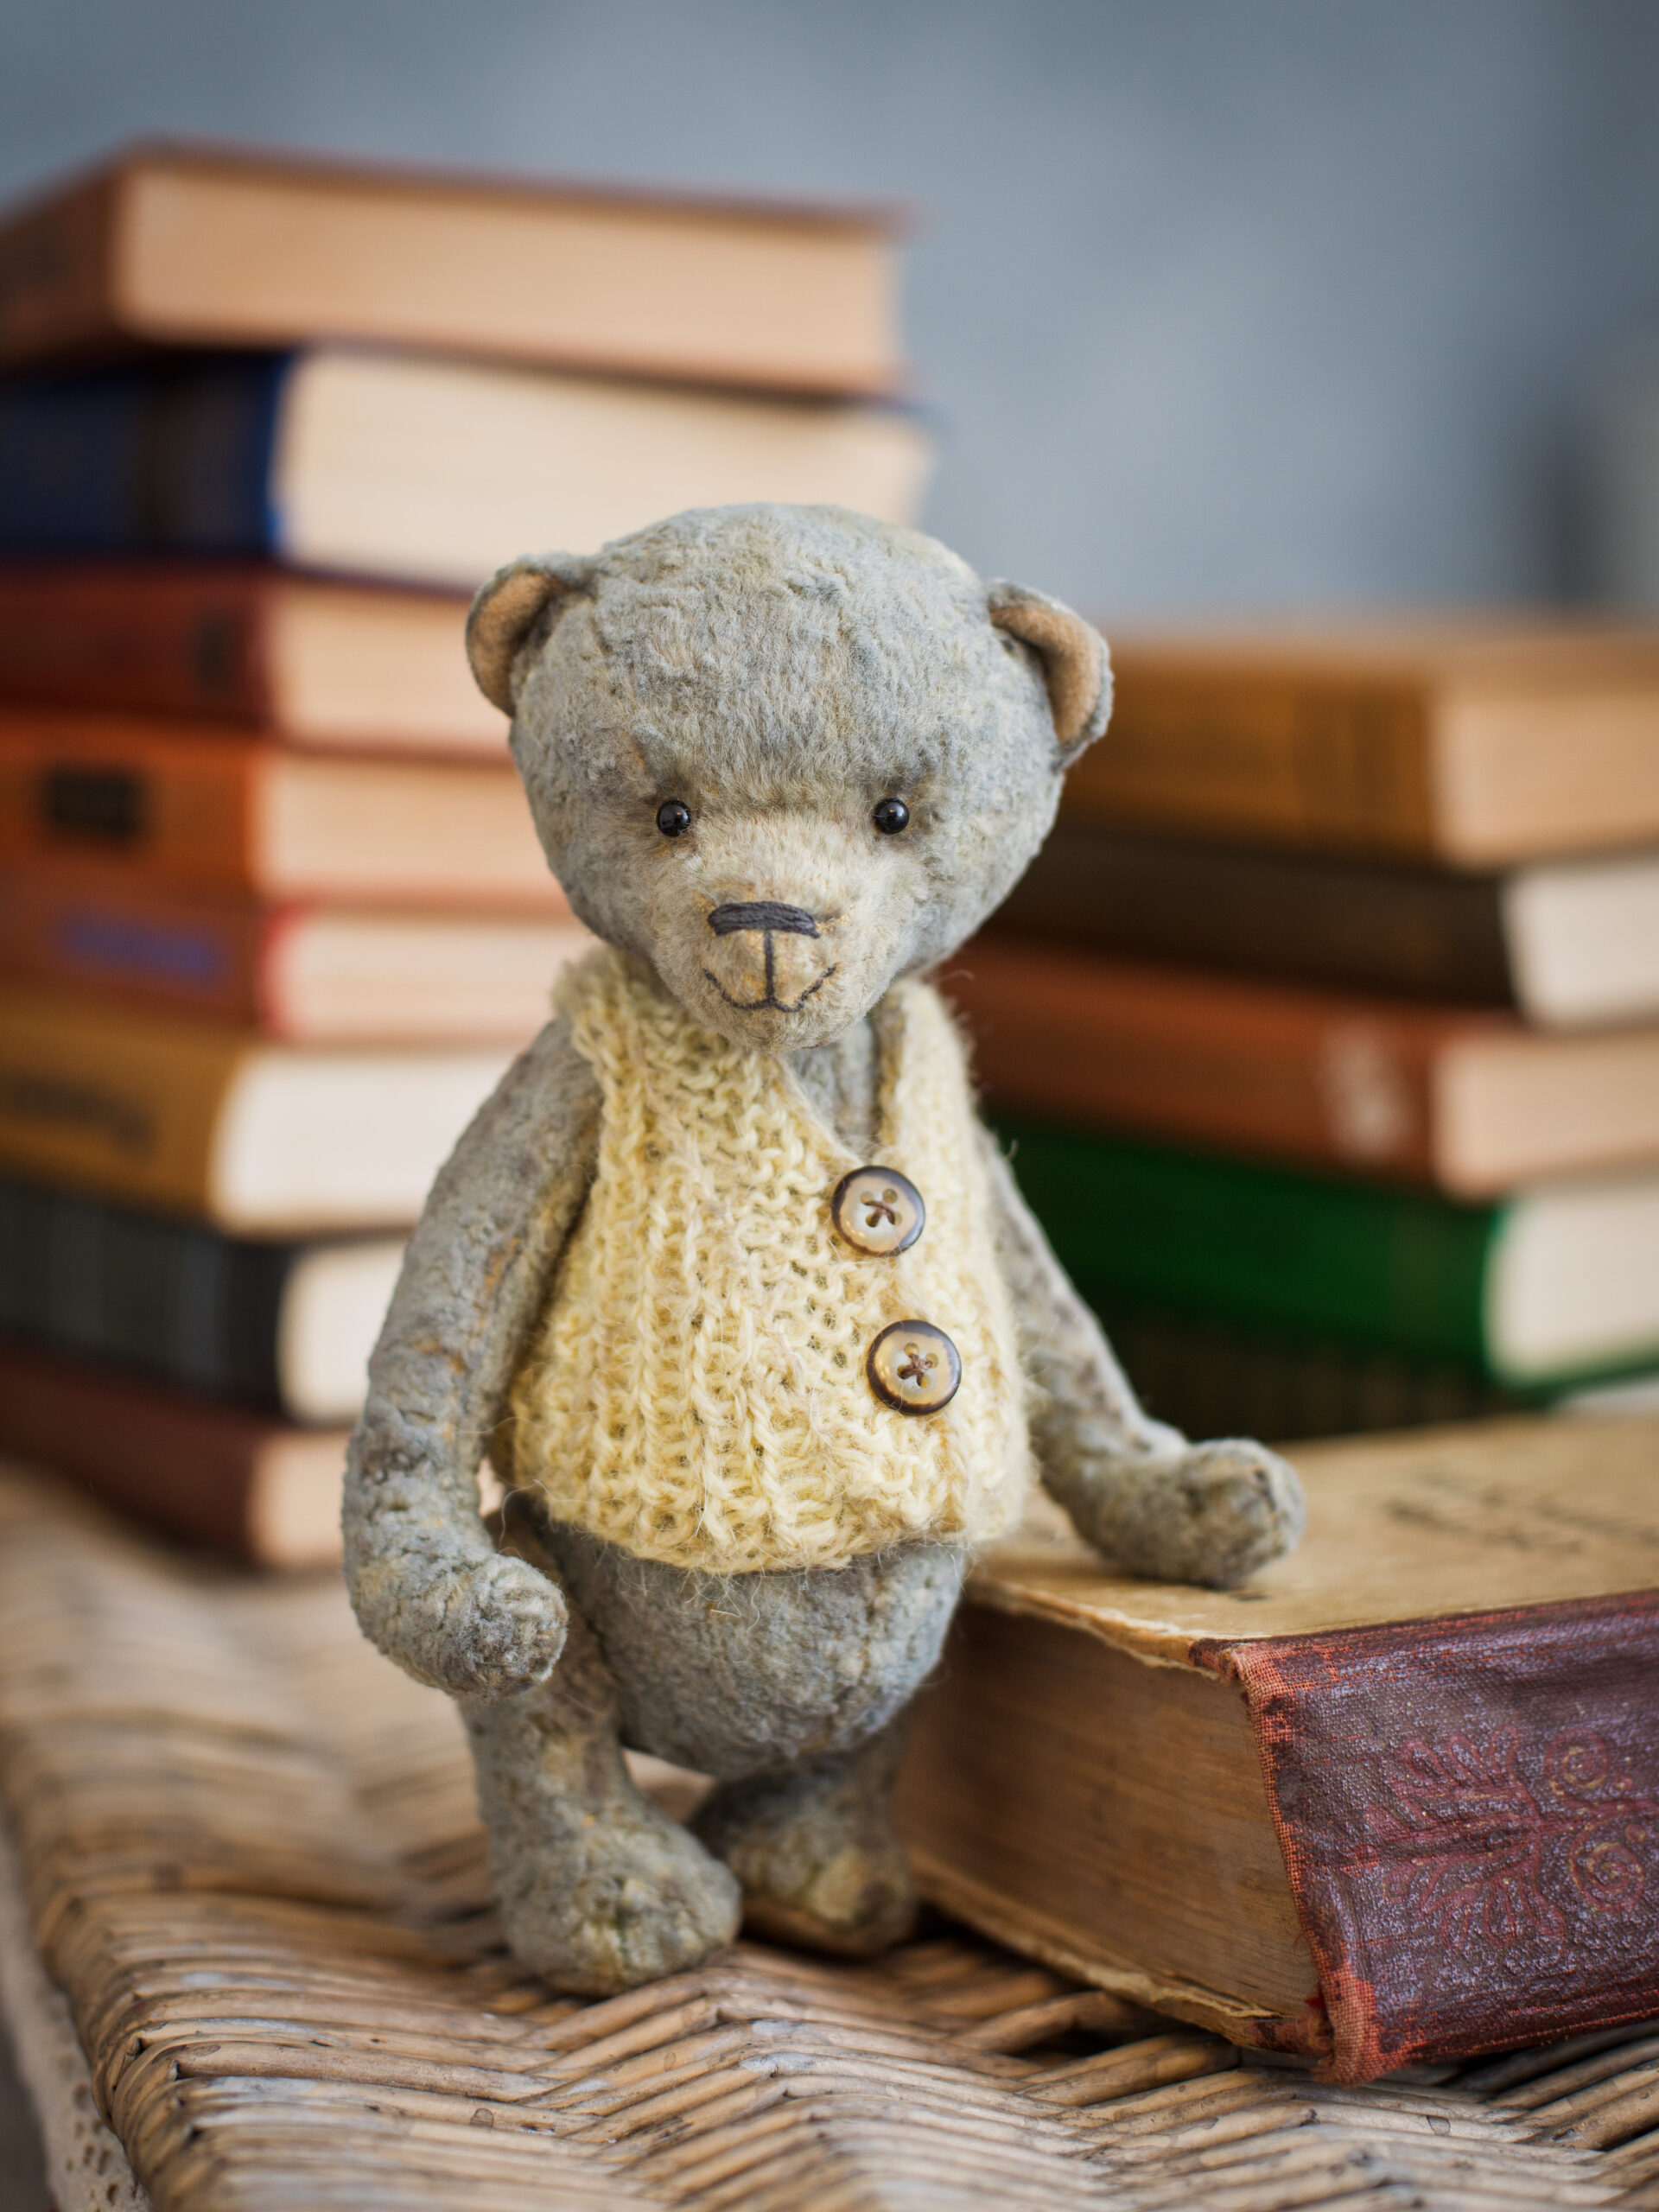 Teddy bear sits on a vintage book